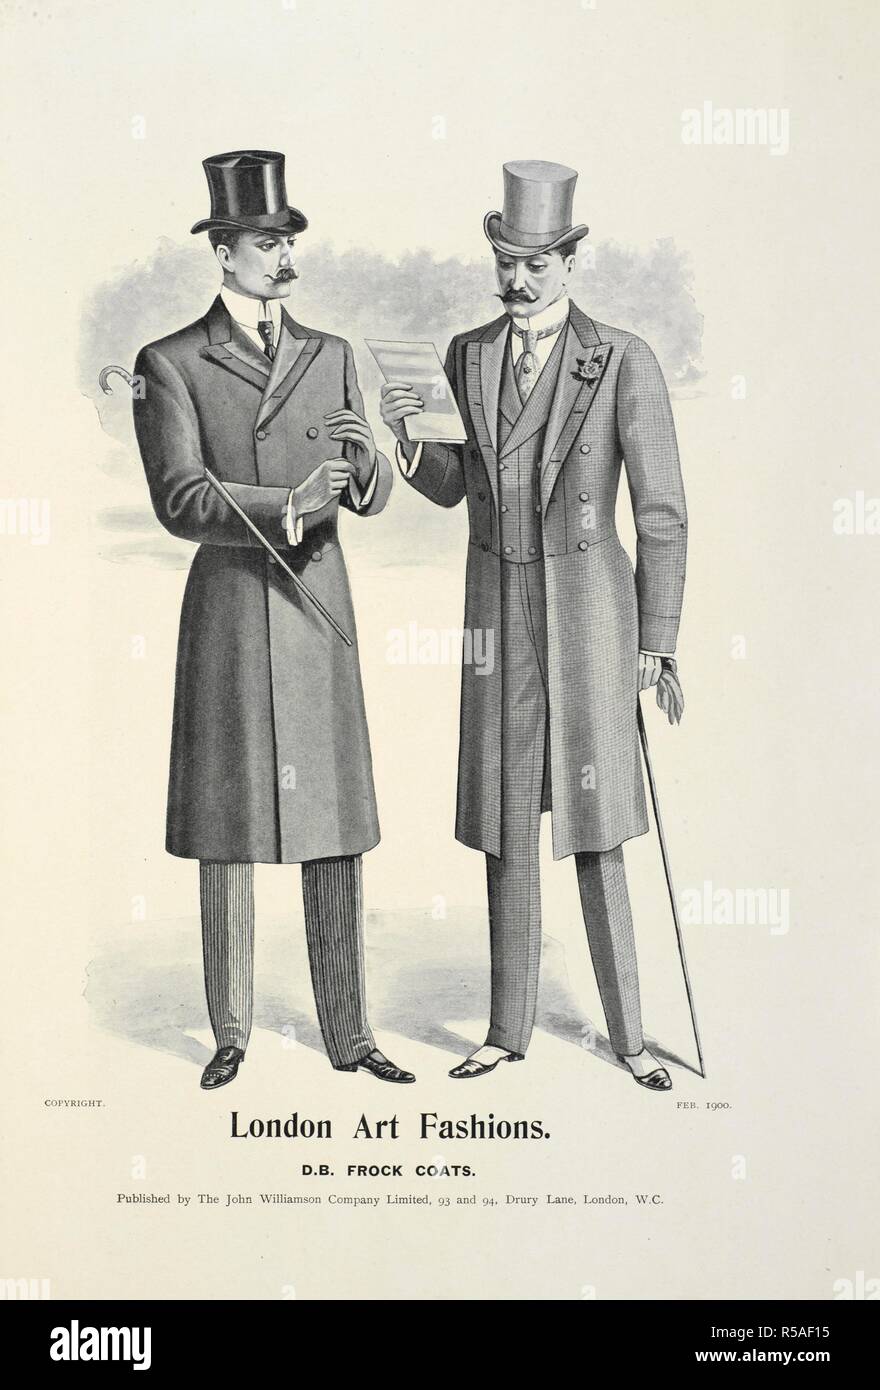 D.B. frock coats. London Art Fashion Journal. London, 1900. Source ...